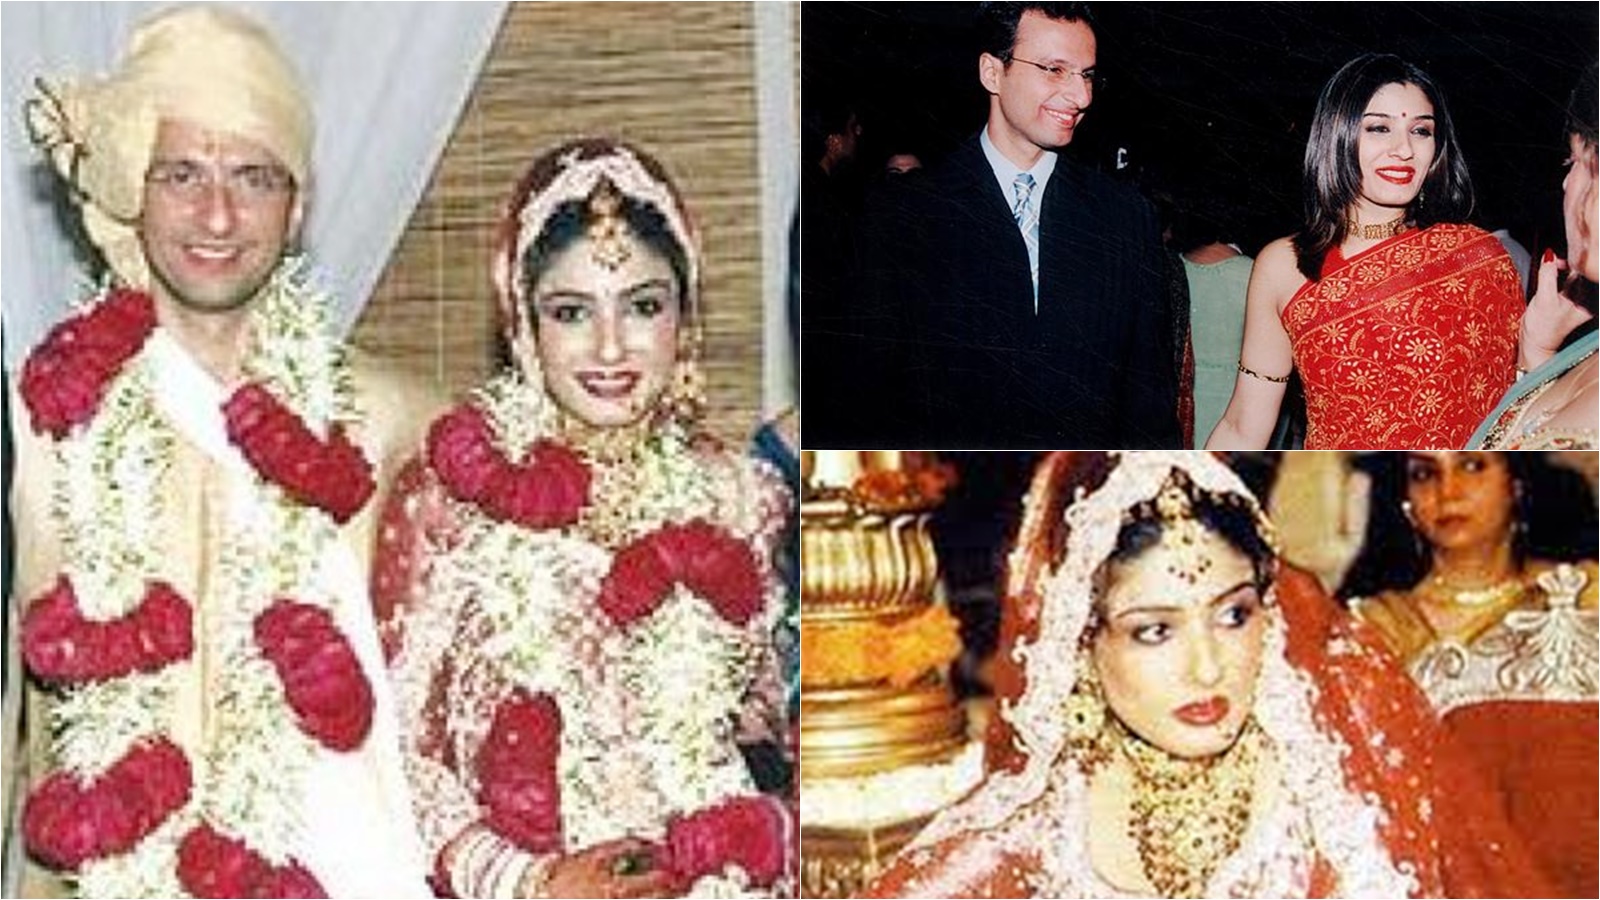 Raveena Tandon Chudai Vedio - Raveena Tandon's lavish wedding with husband Anil Thadani was fit for a  princess, see archive images | Bollywood News - The Indian Express